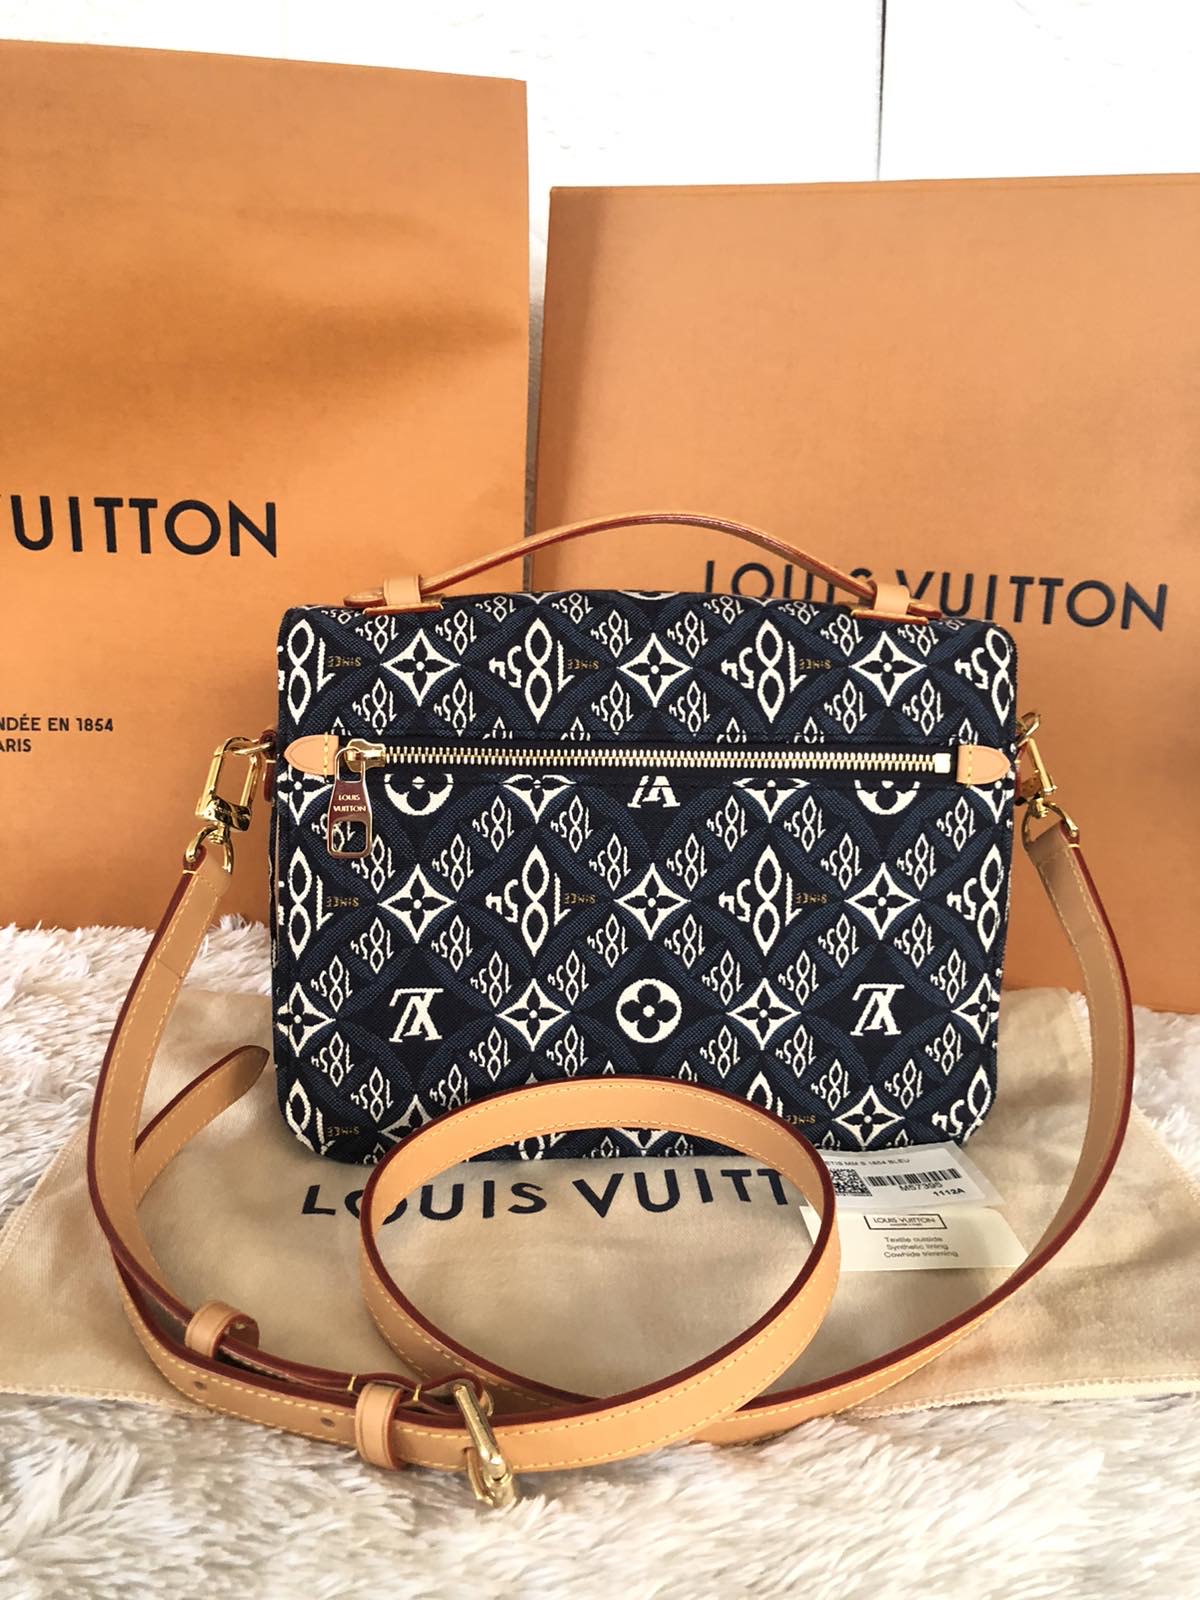 Louis Vuitton 2000 - 254 For Sale on 1stDibs  louis vuitton 2000 bag  collection, 2000s louis vuitton, louis vuitton purse 2000s